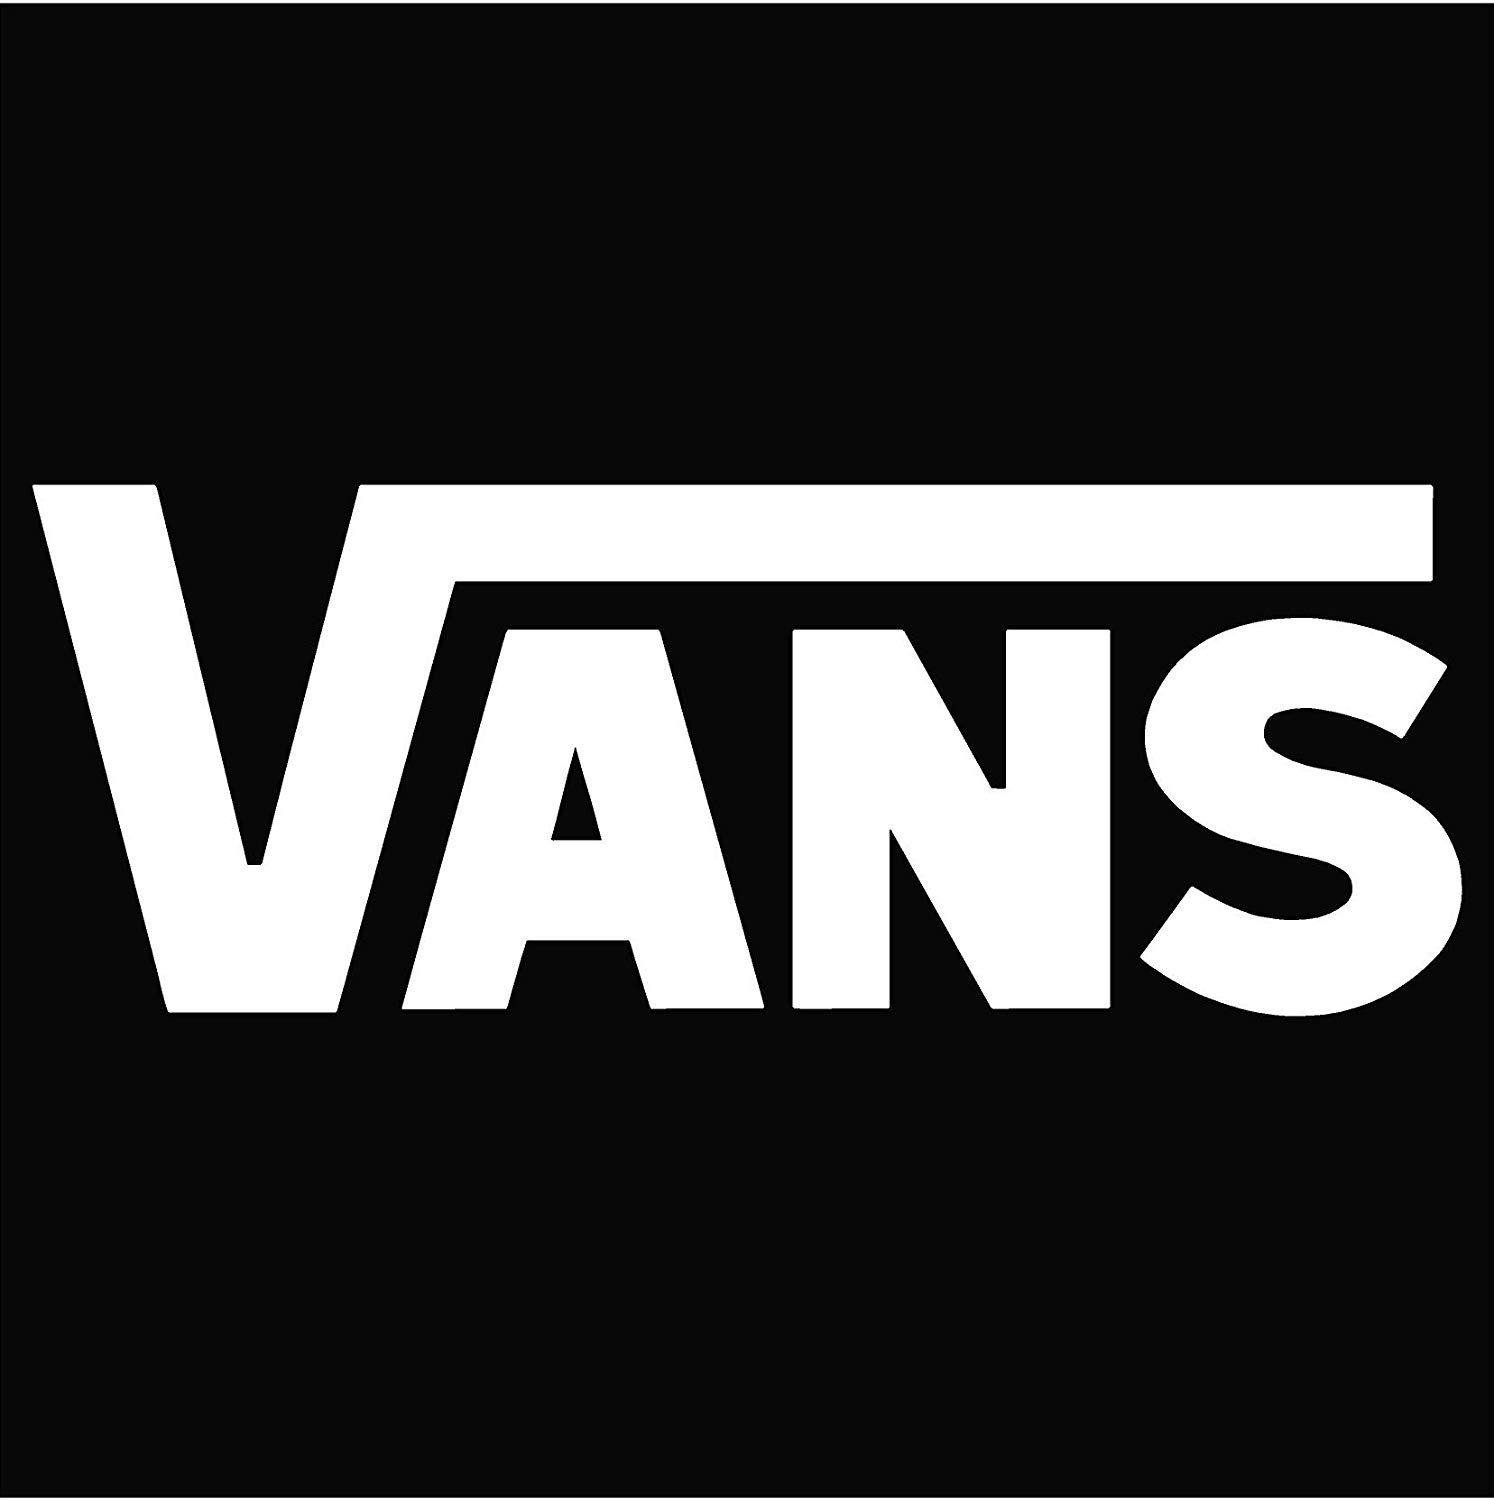 Black and White Vans Logo - Vans Logo Vinyl Sticker Decal Decal White 6 Inch: Automotive